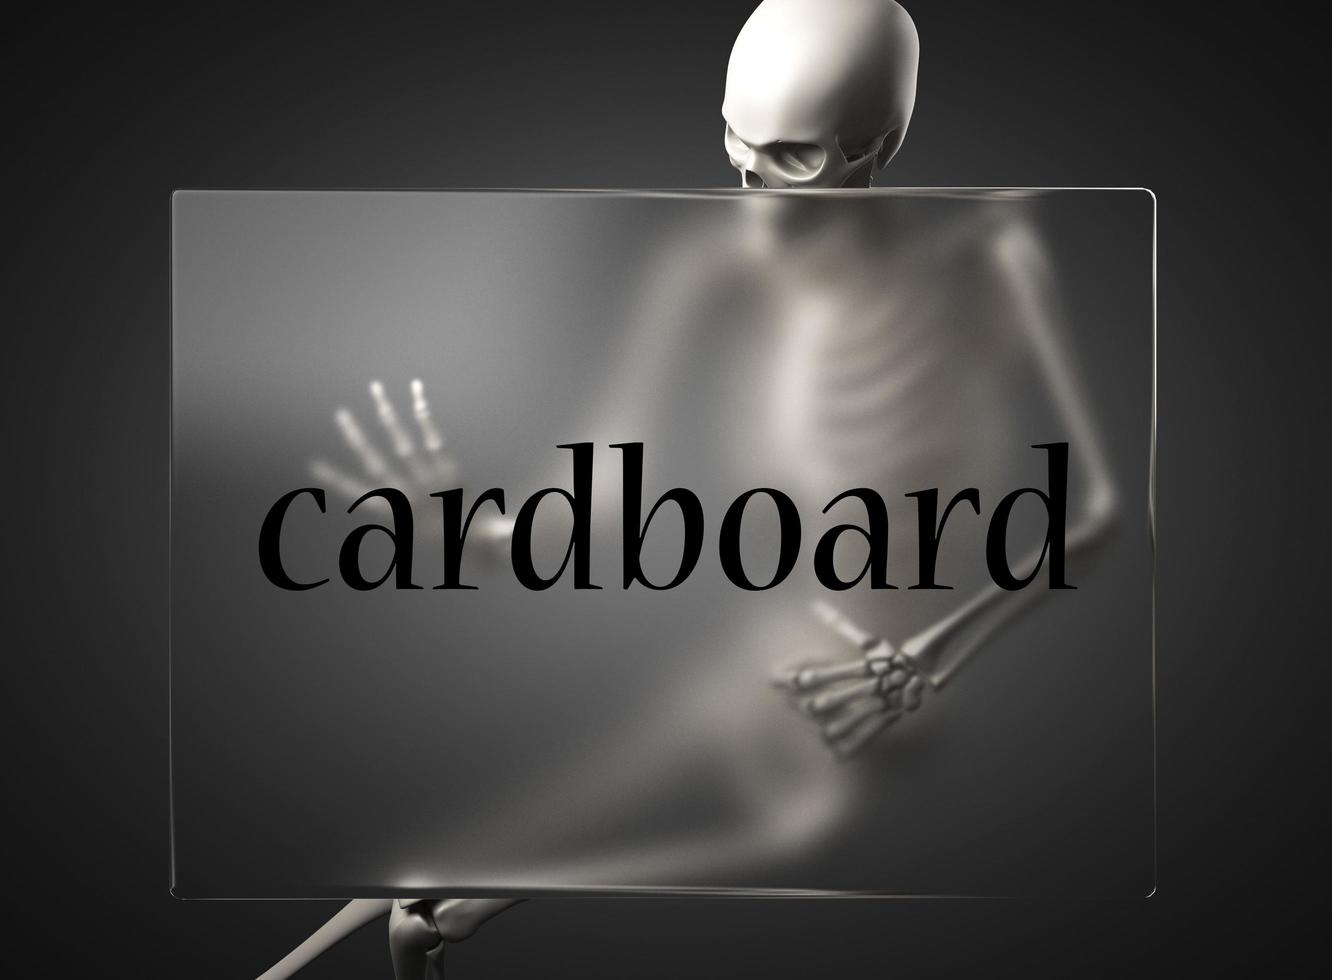 cardboard word on glass and skeleton photo